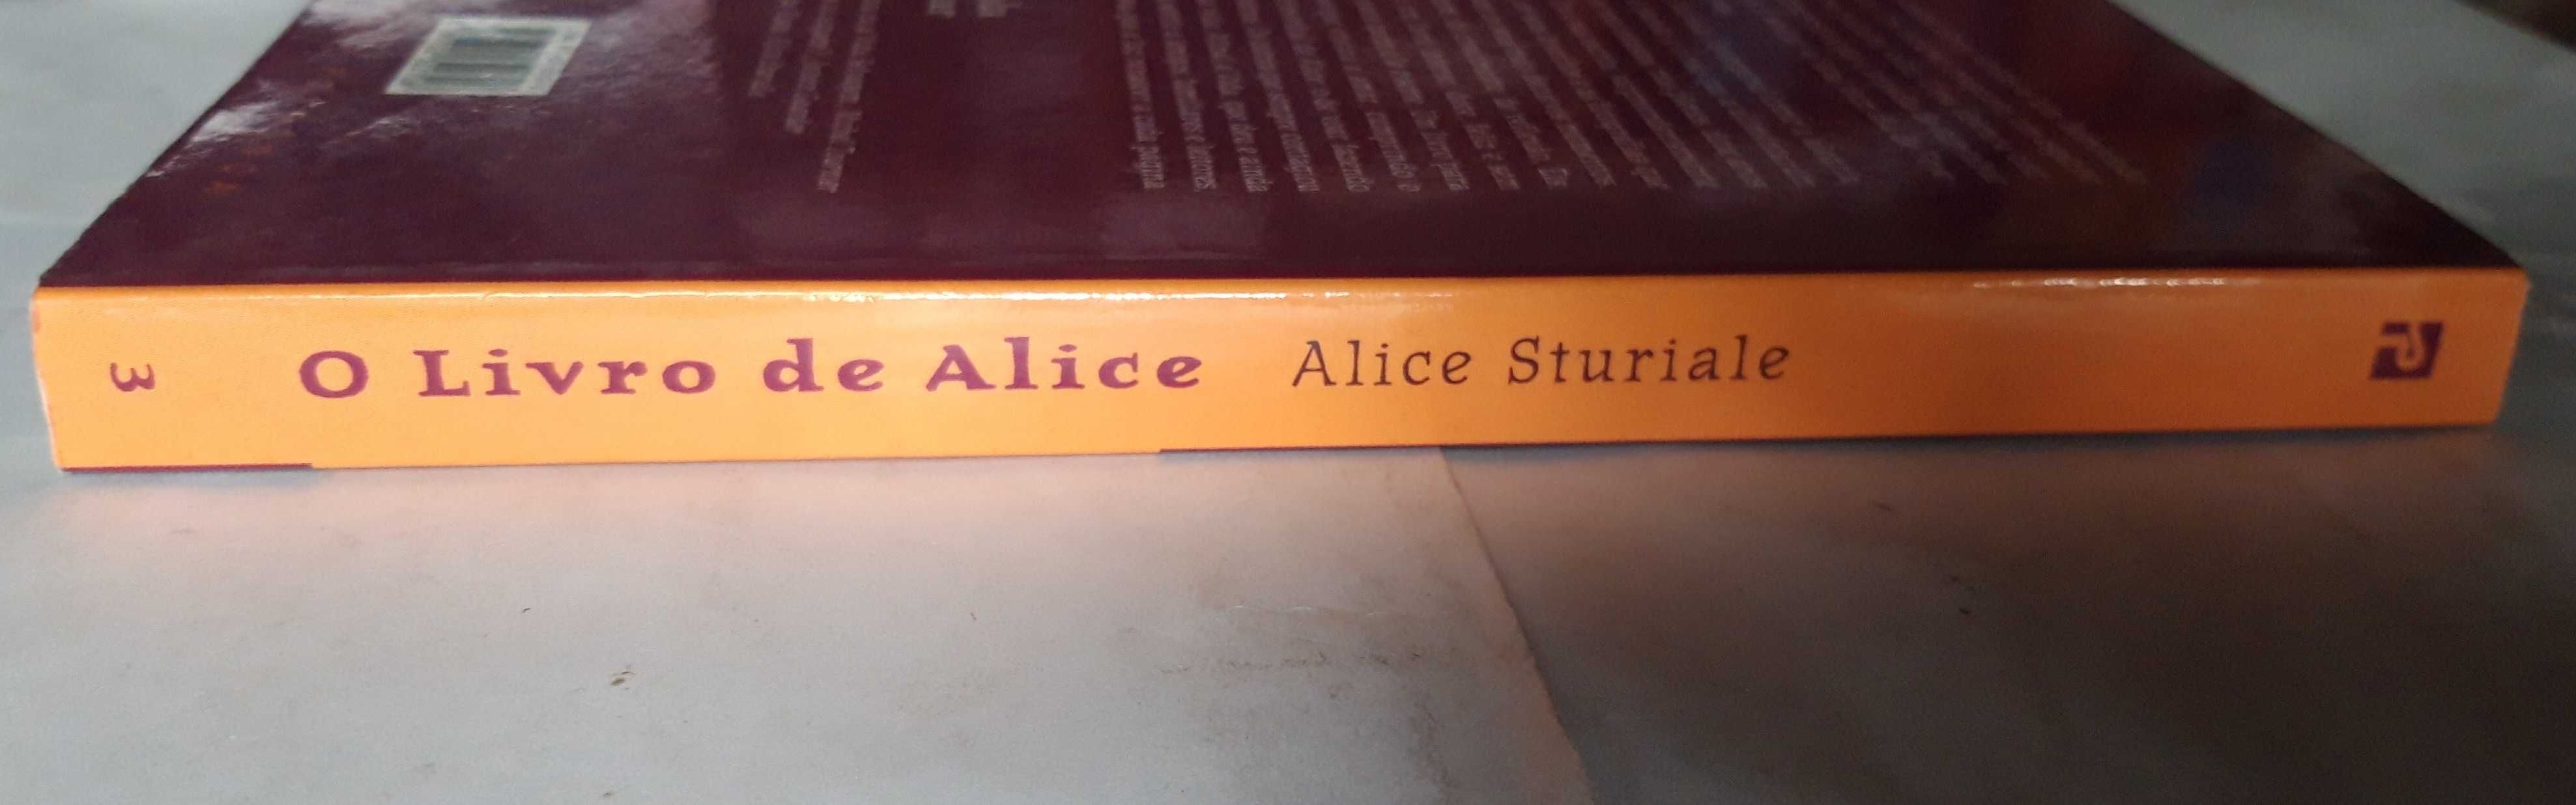 Livro REF: PAR1 - Alice Sturiale - O Livro de Alice